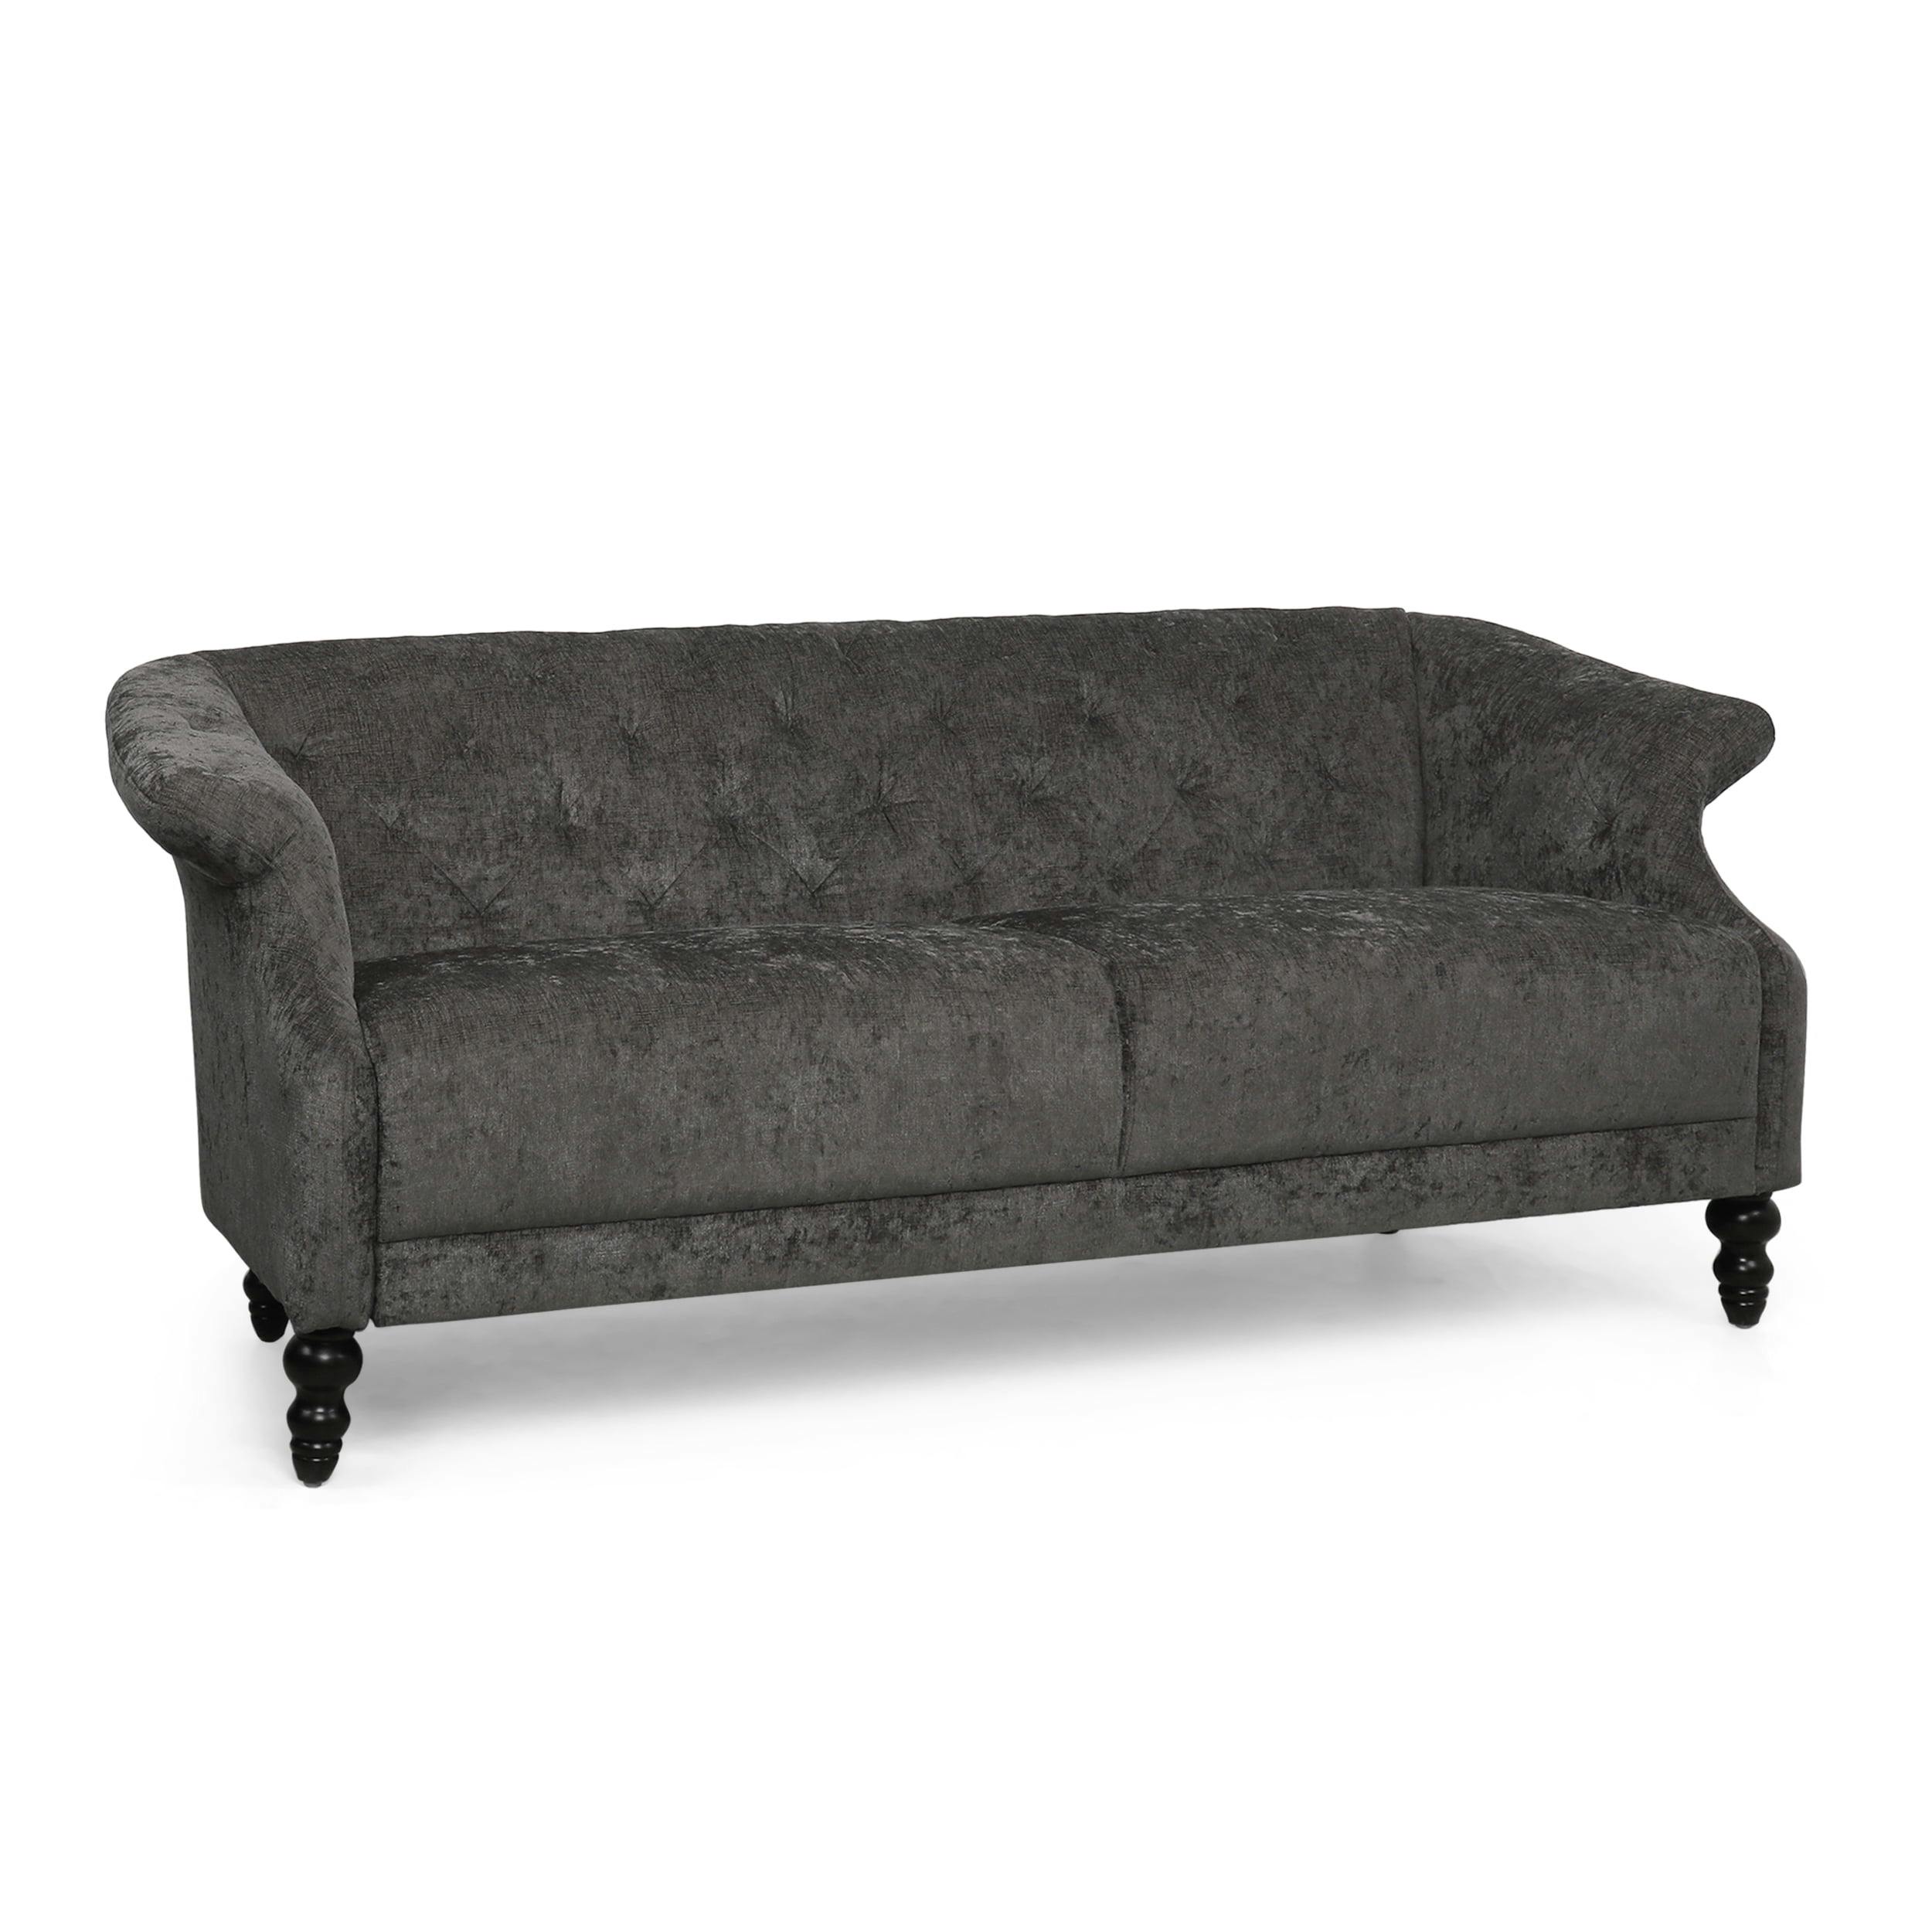 Ellerslie Dark Charcoal & Brown Tufted Fabric 3-Seater Lawson Sofa